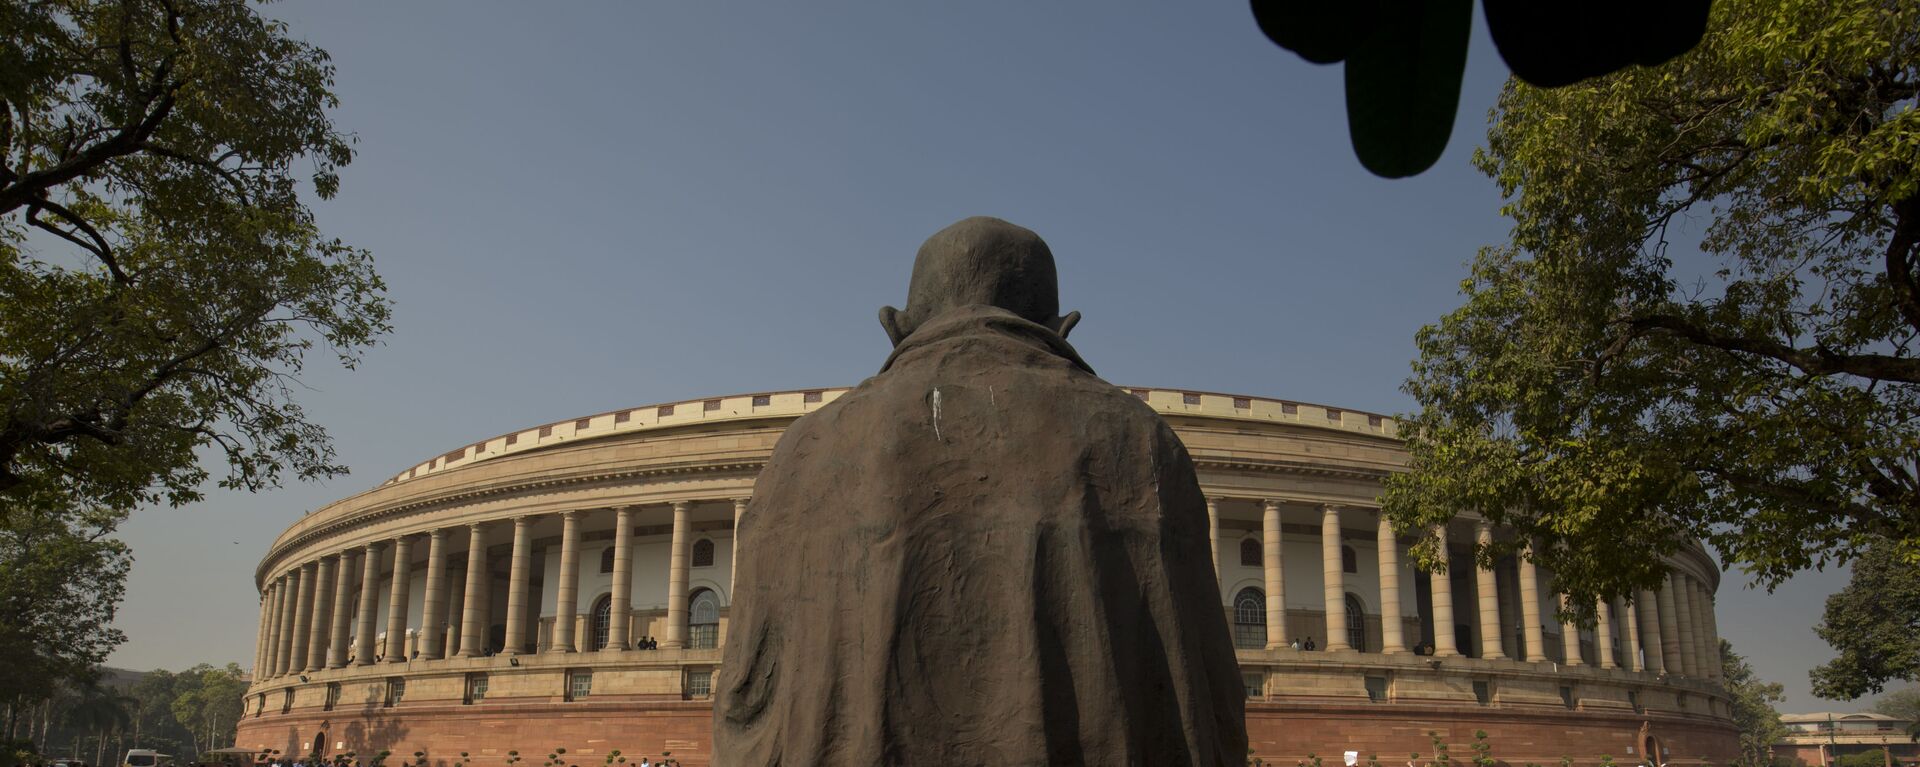 A statue of Mahatma Gandhi overlooks the Indian parliament building (File) - Sputnik International, 1920, 06.08.2021